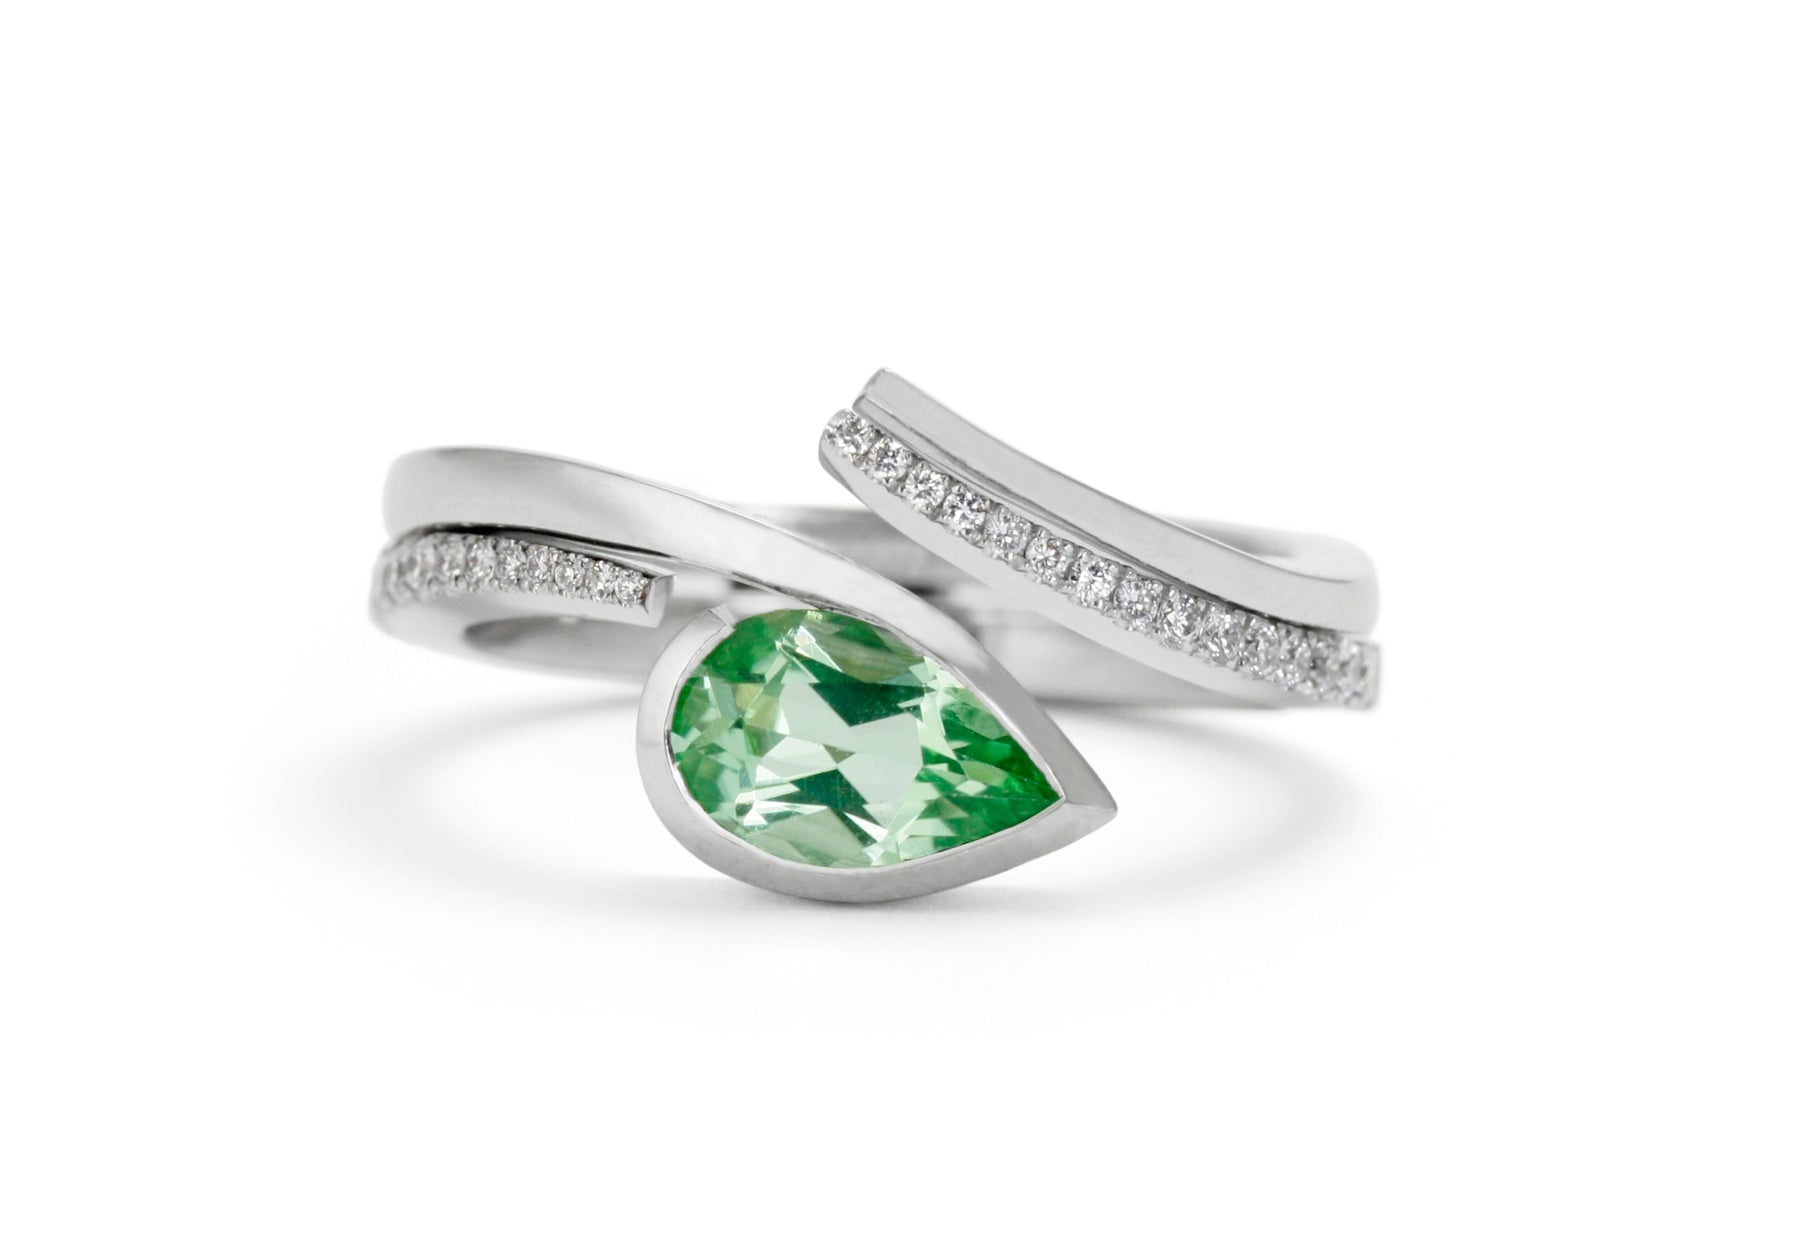 Twist Paraiba tourmaline platinum engagement ring and white diamond pave set fitted wedding ring